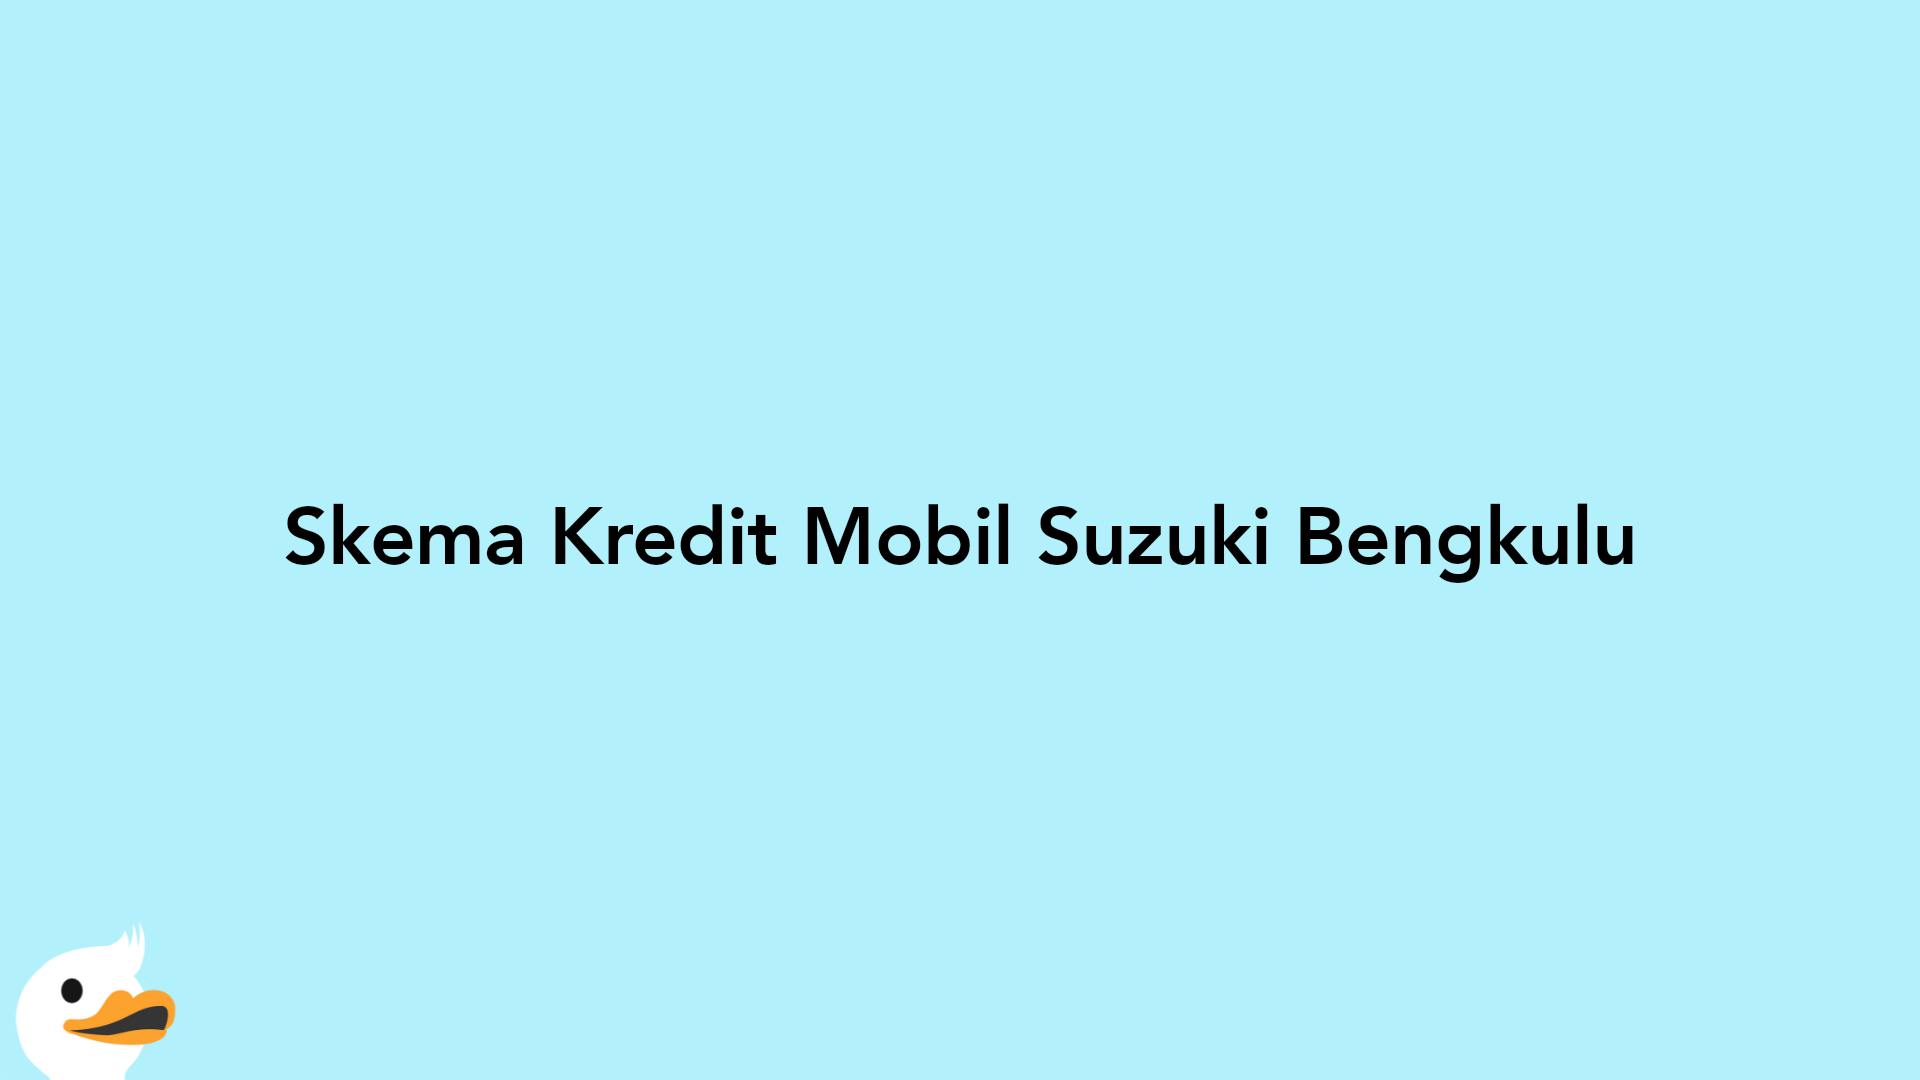 Skema Kredit Mobil Suzuki Bengkulu